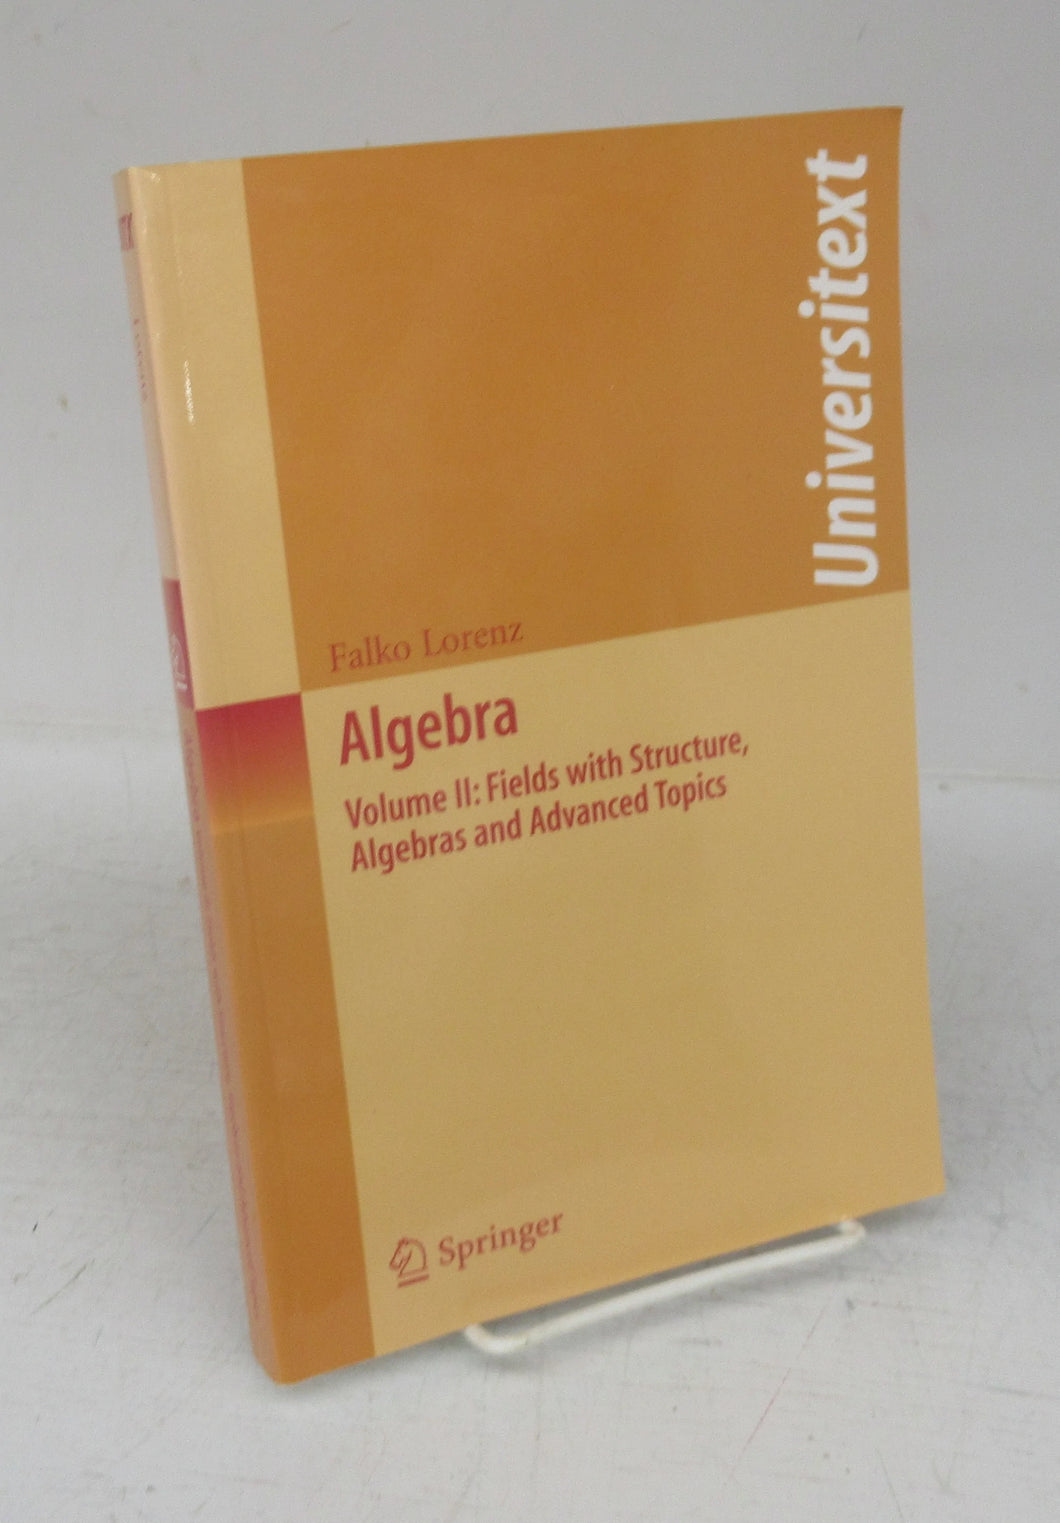 II:　and　Attic　–　Algebra　with　Volume　Fields　Topics　Advanced　Structure,　Algebras　Books